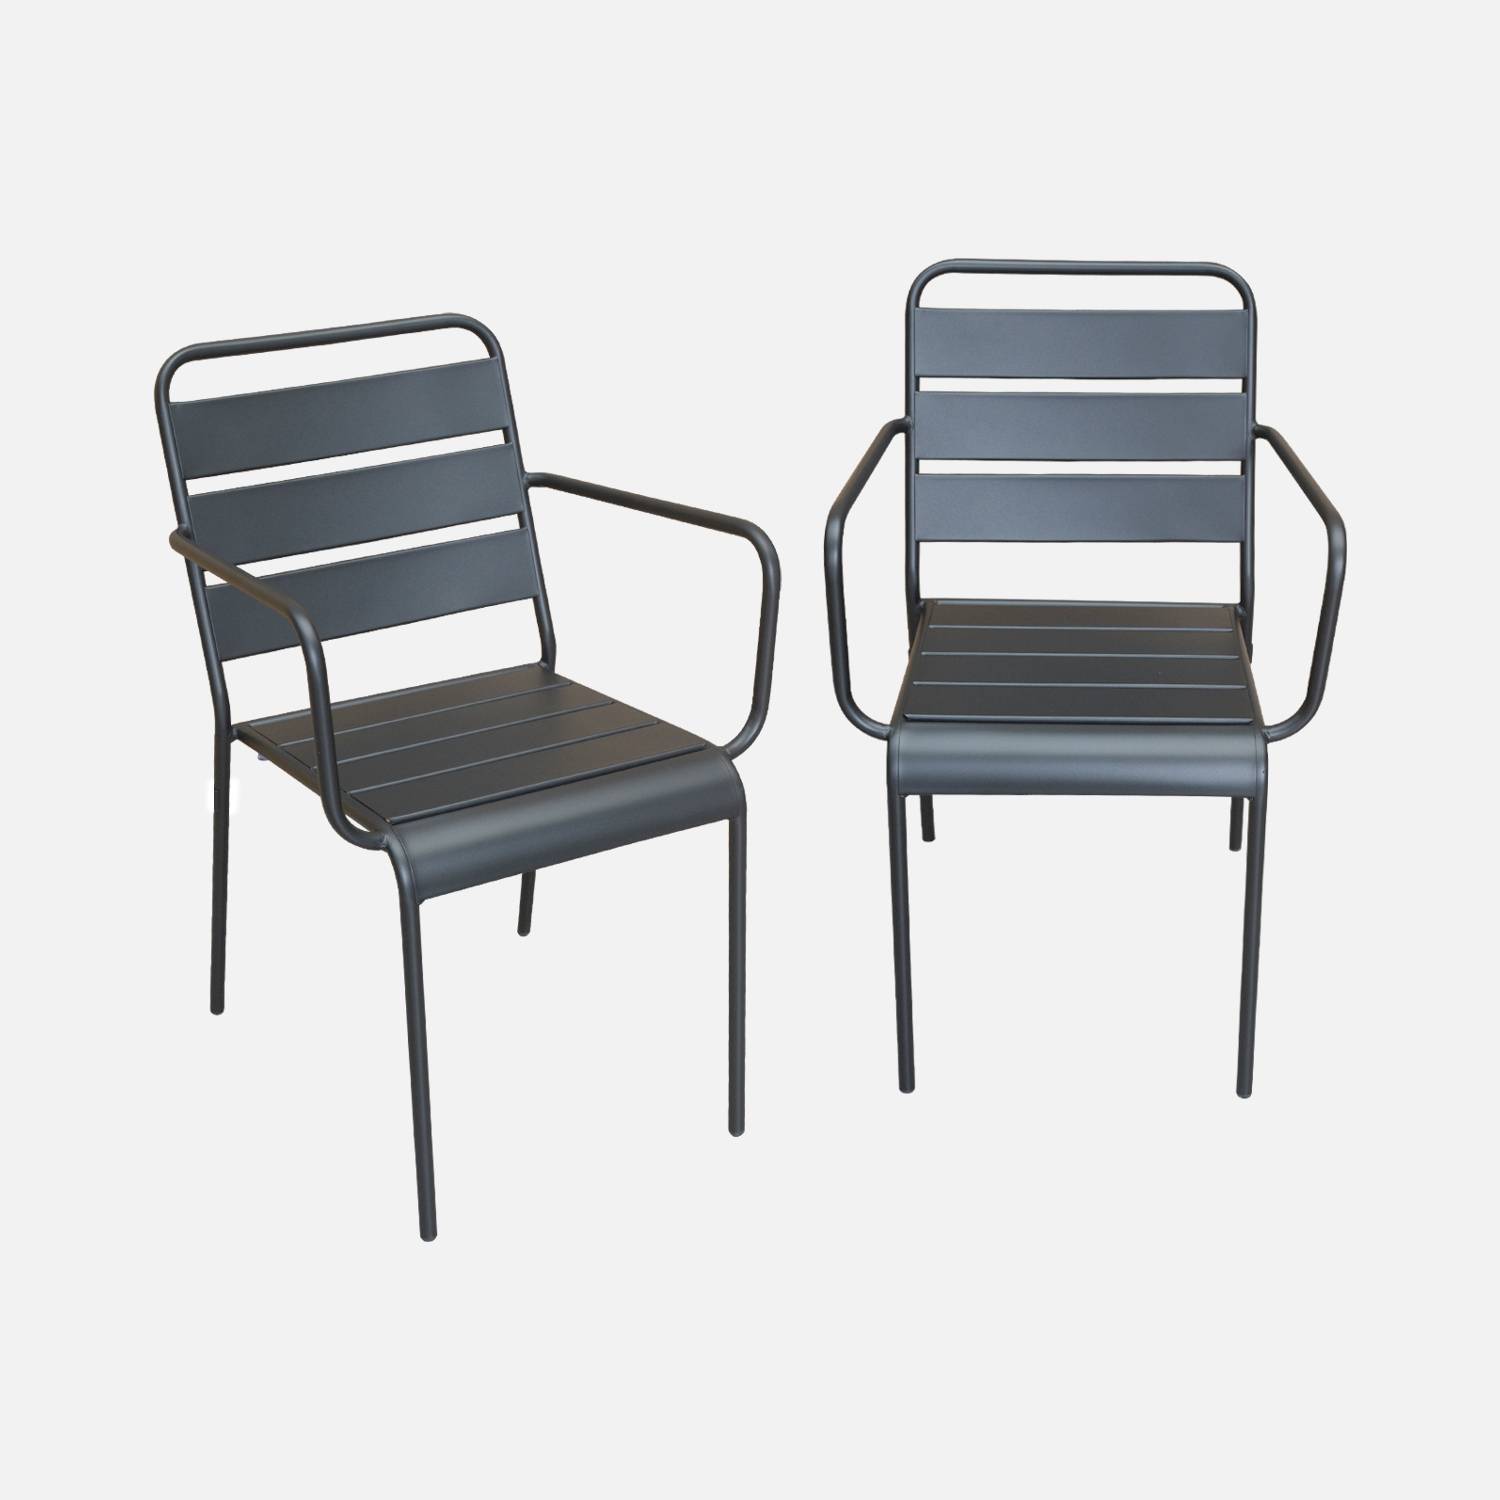 2er Set stapelbare Sessel aus Metall in grau l sweeek